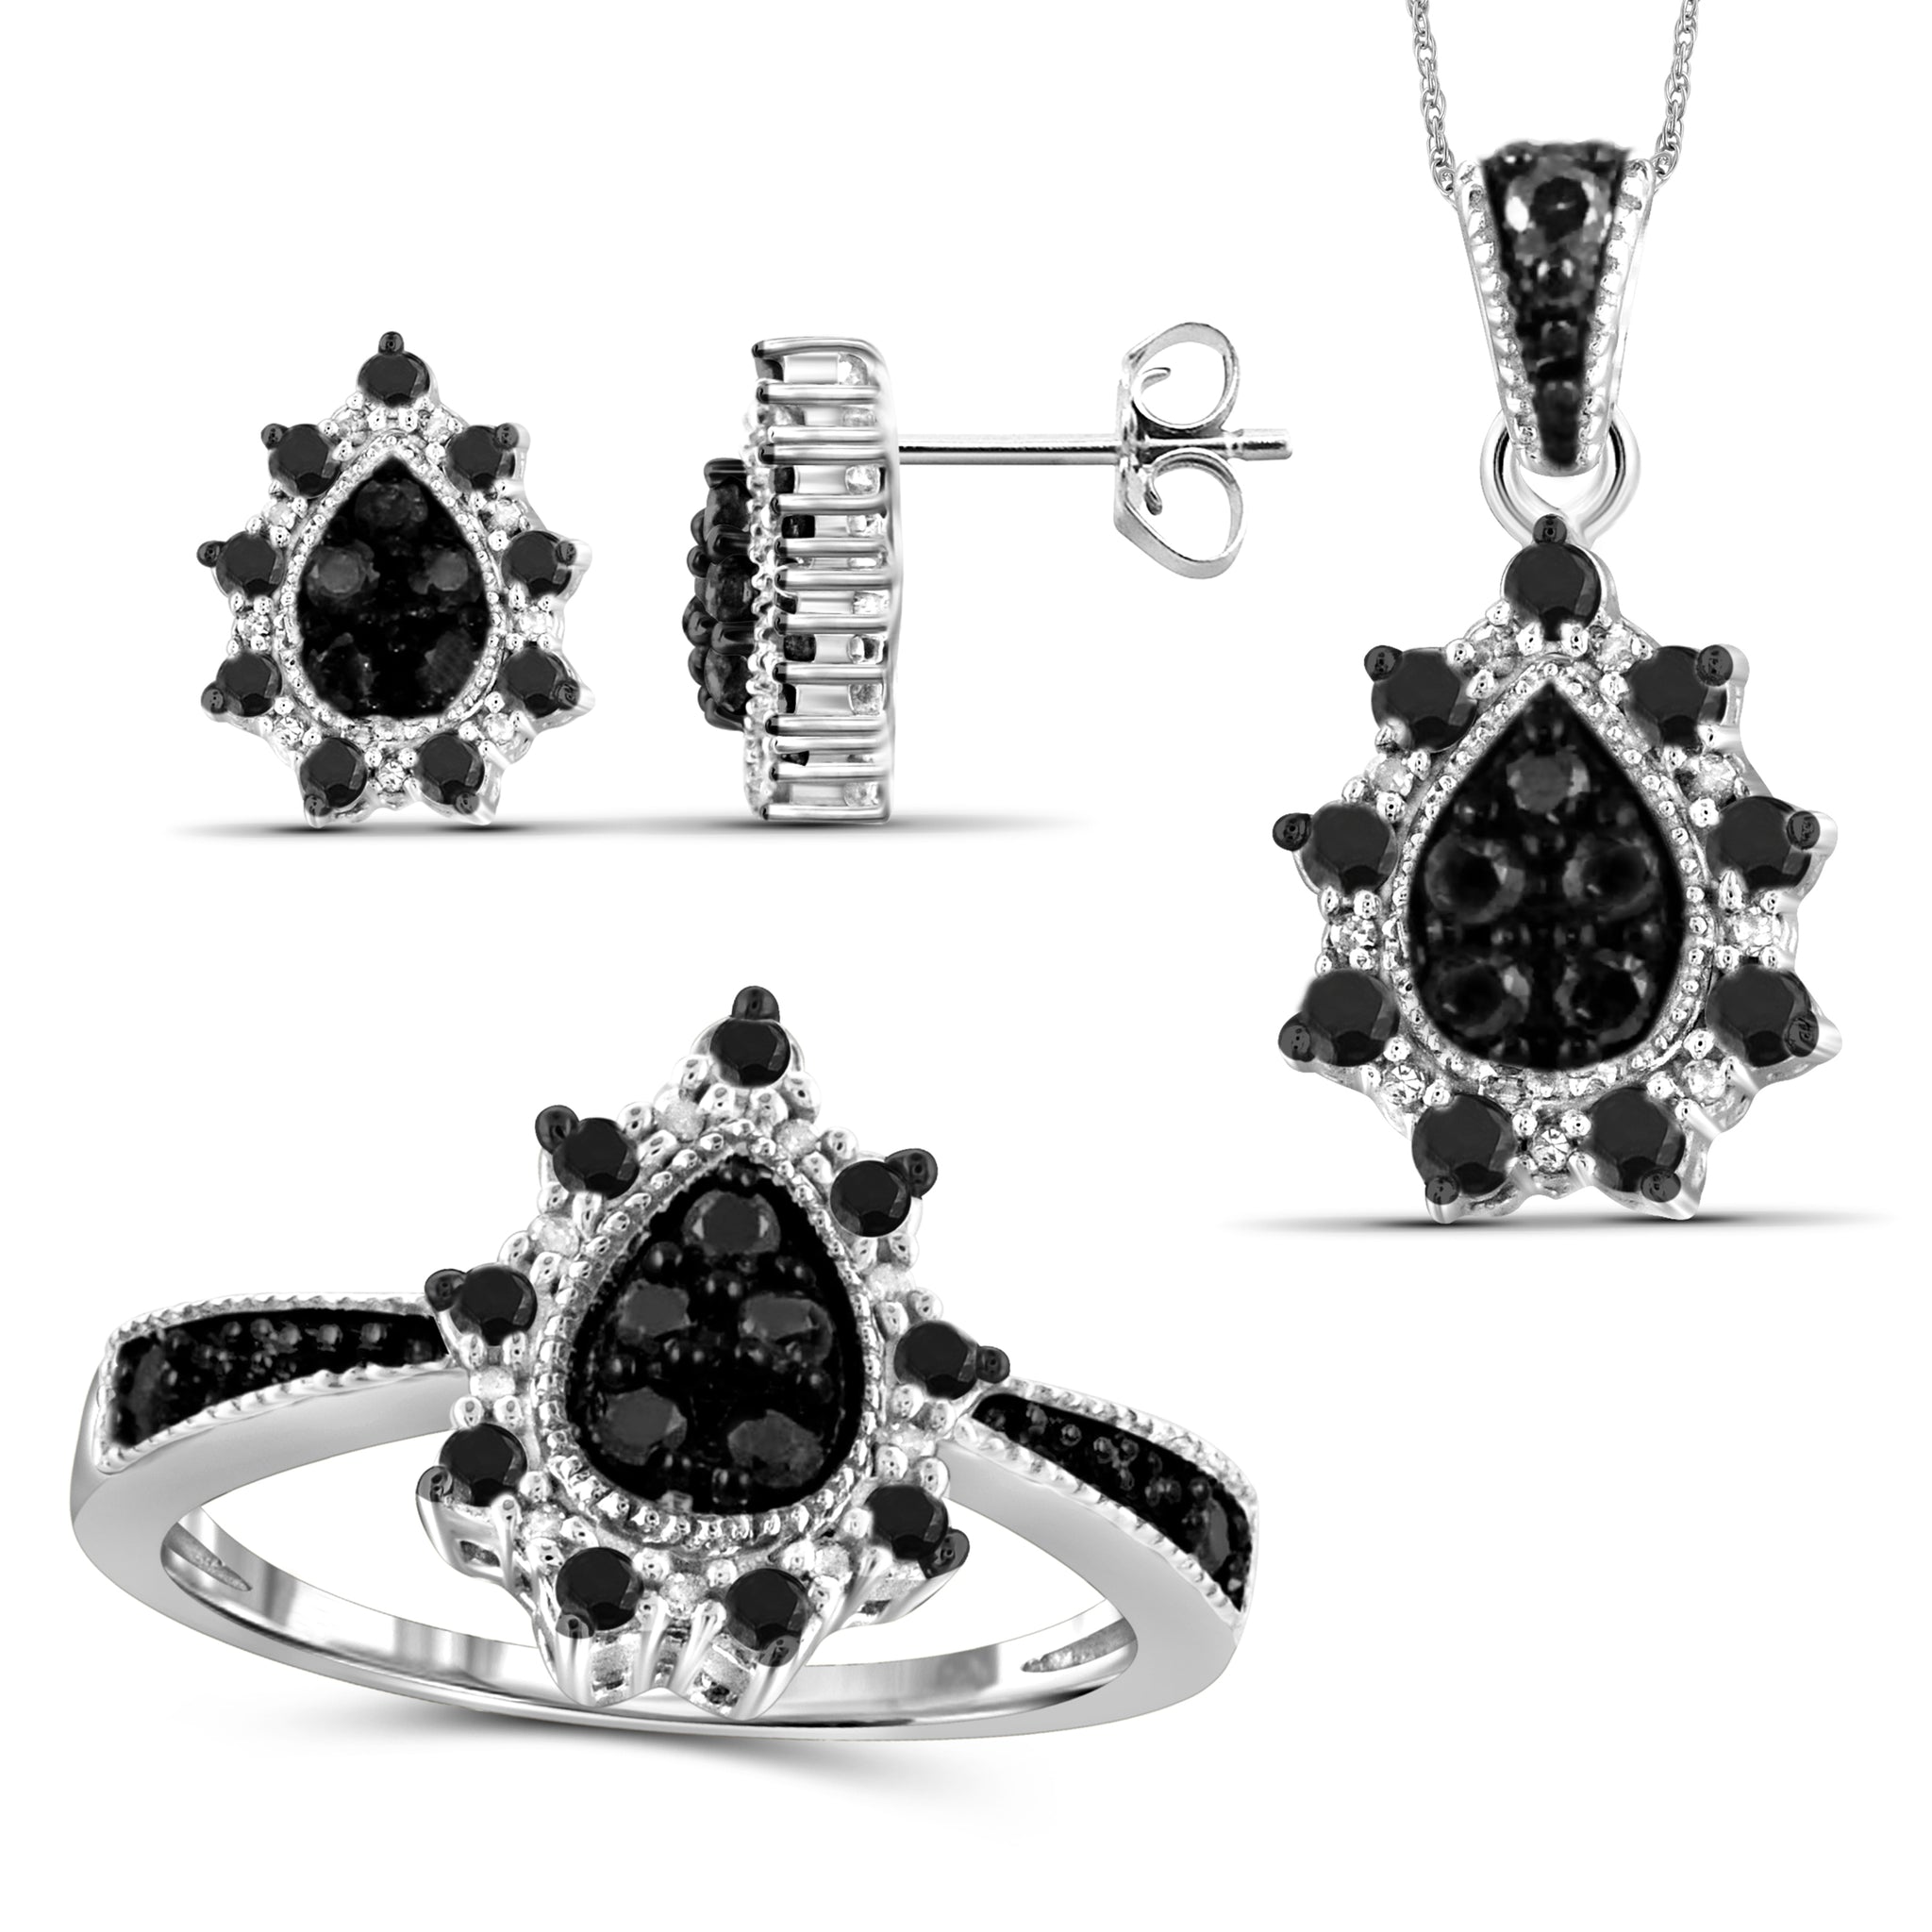 JewelonFire 1.00 Carat T.W. Black And White Diamond Sterling Silver 3 Piece Jewelry Set